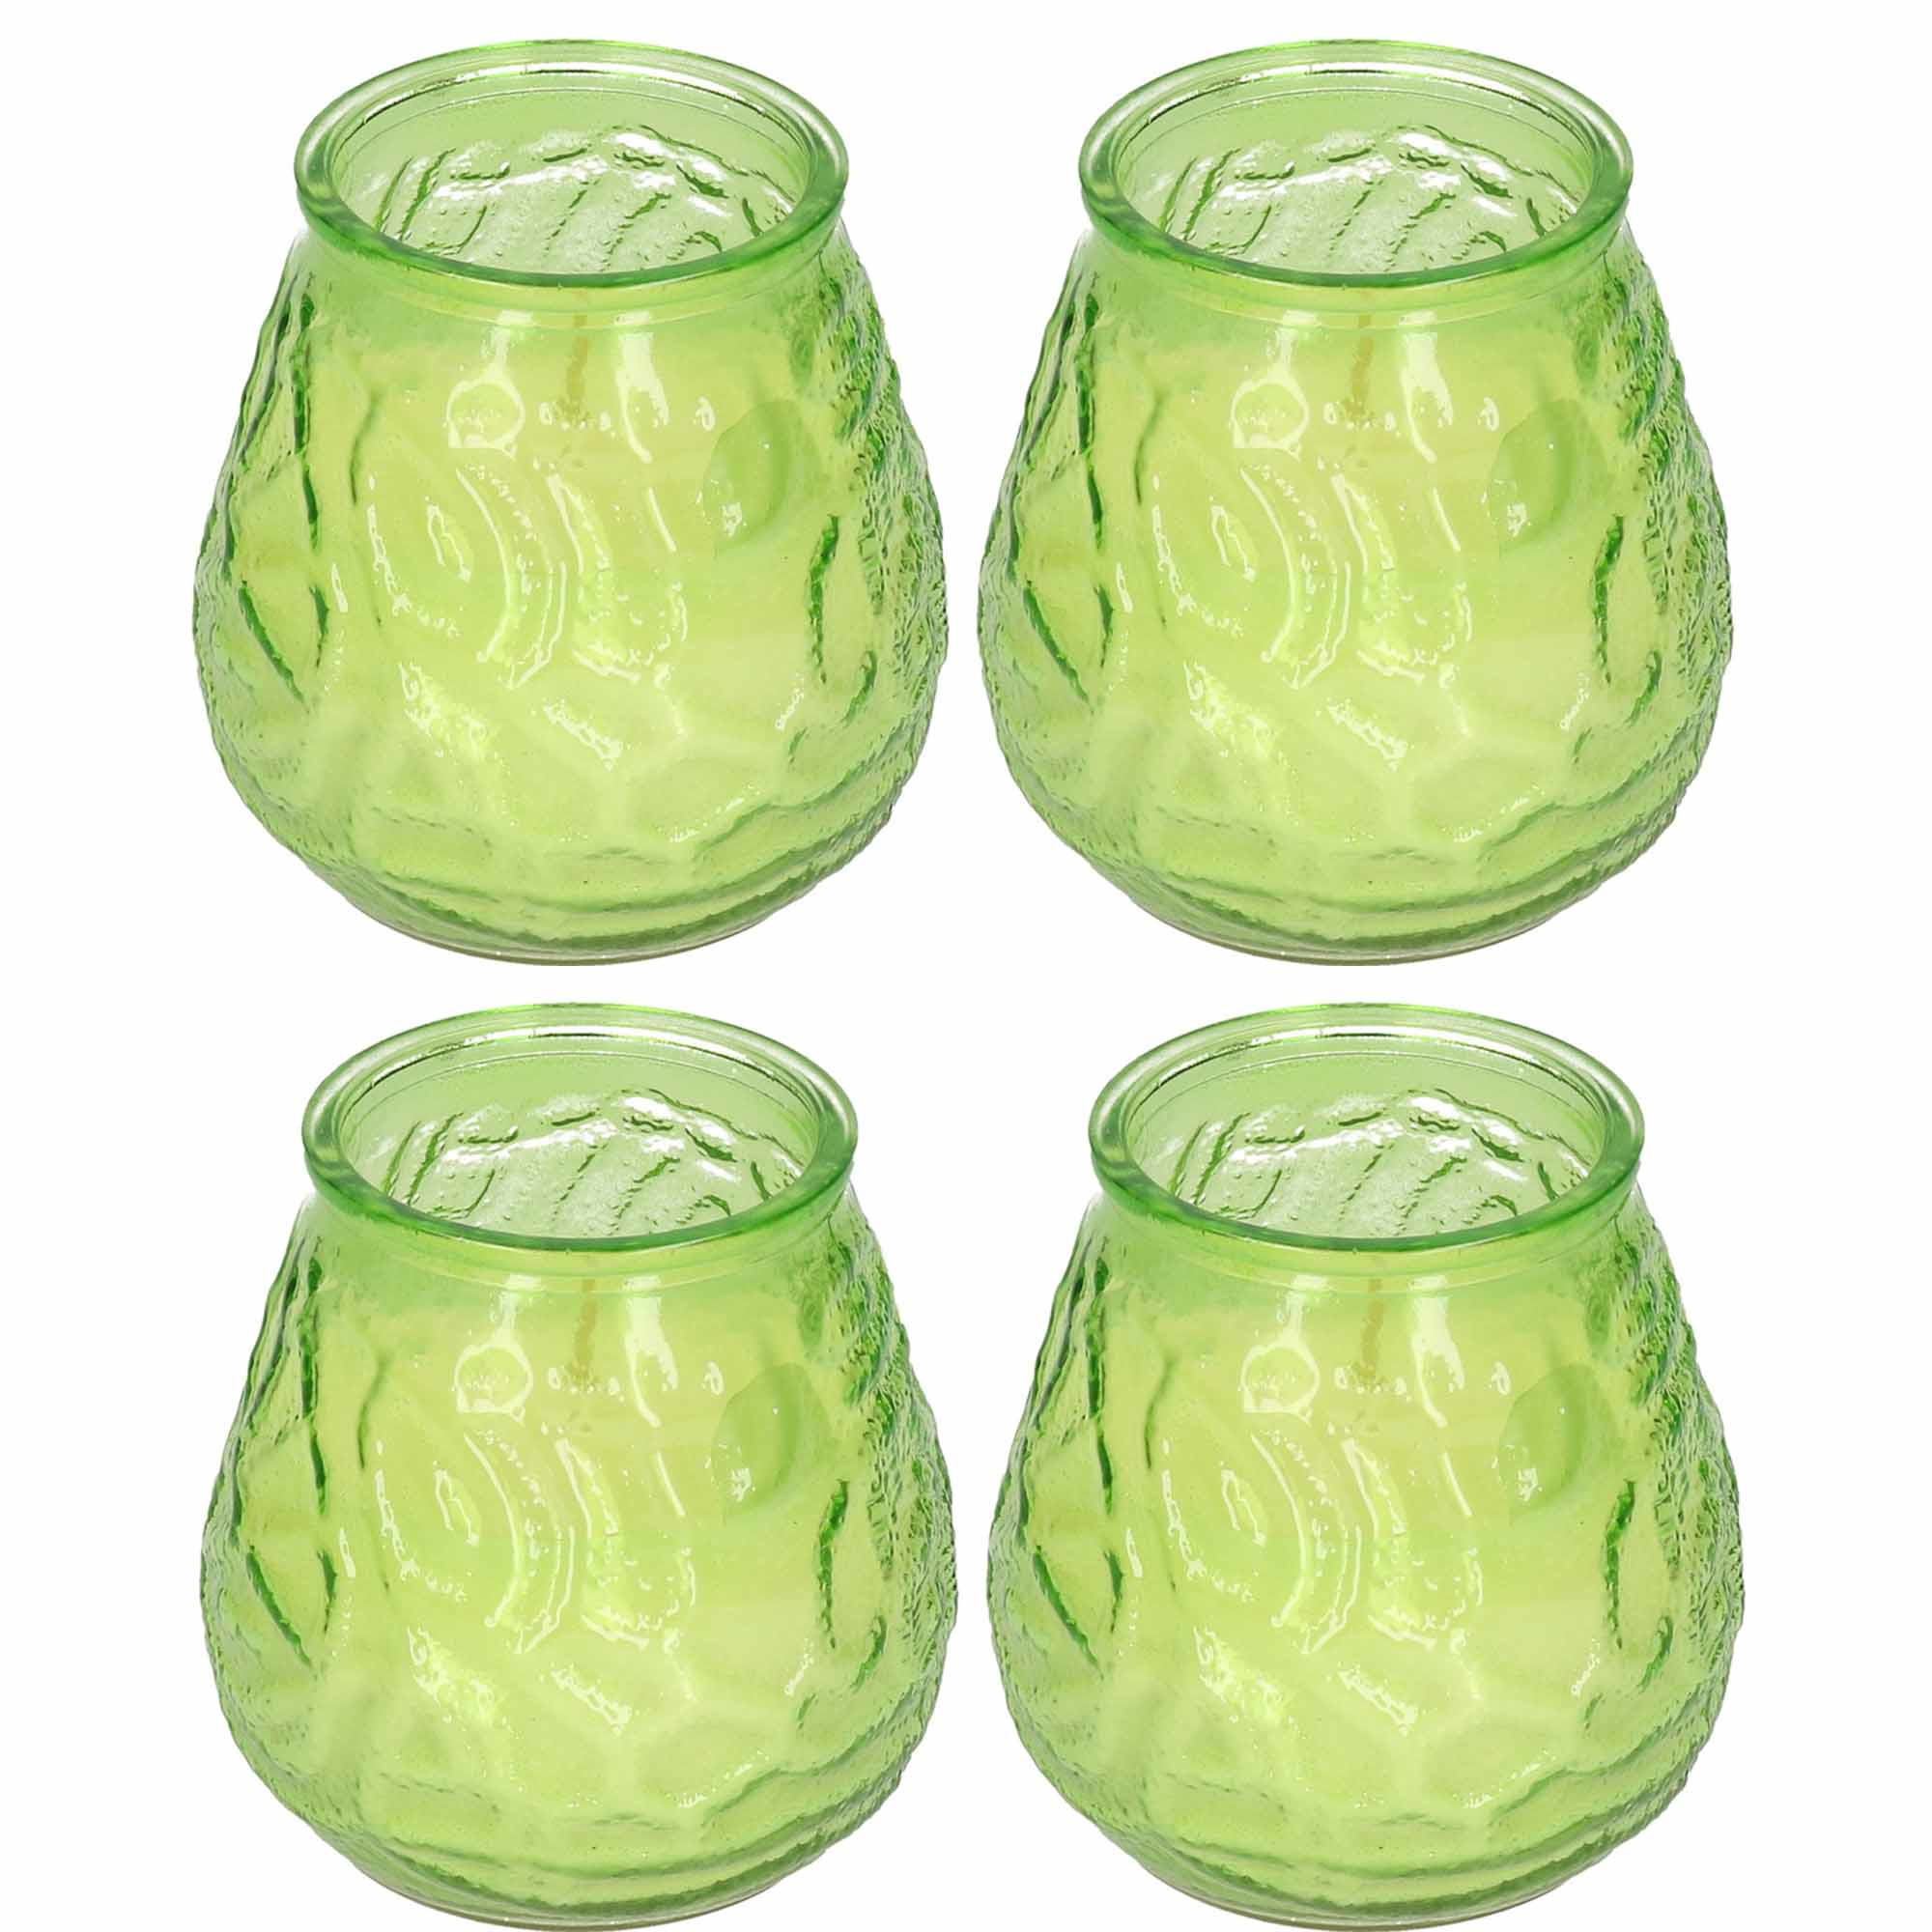 Windlicht geurkaars - 4x - groen glas - 48 branduren - citrusgeur